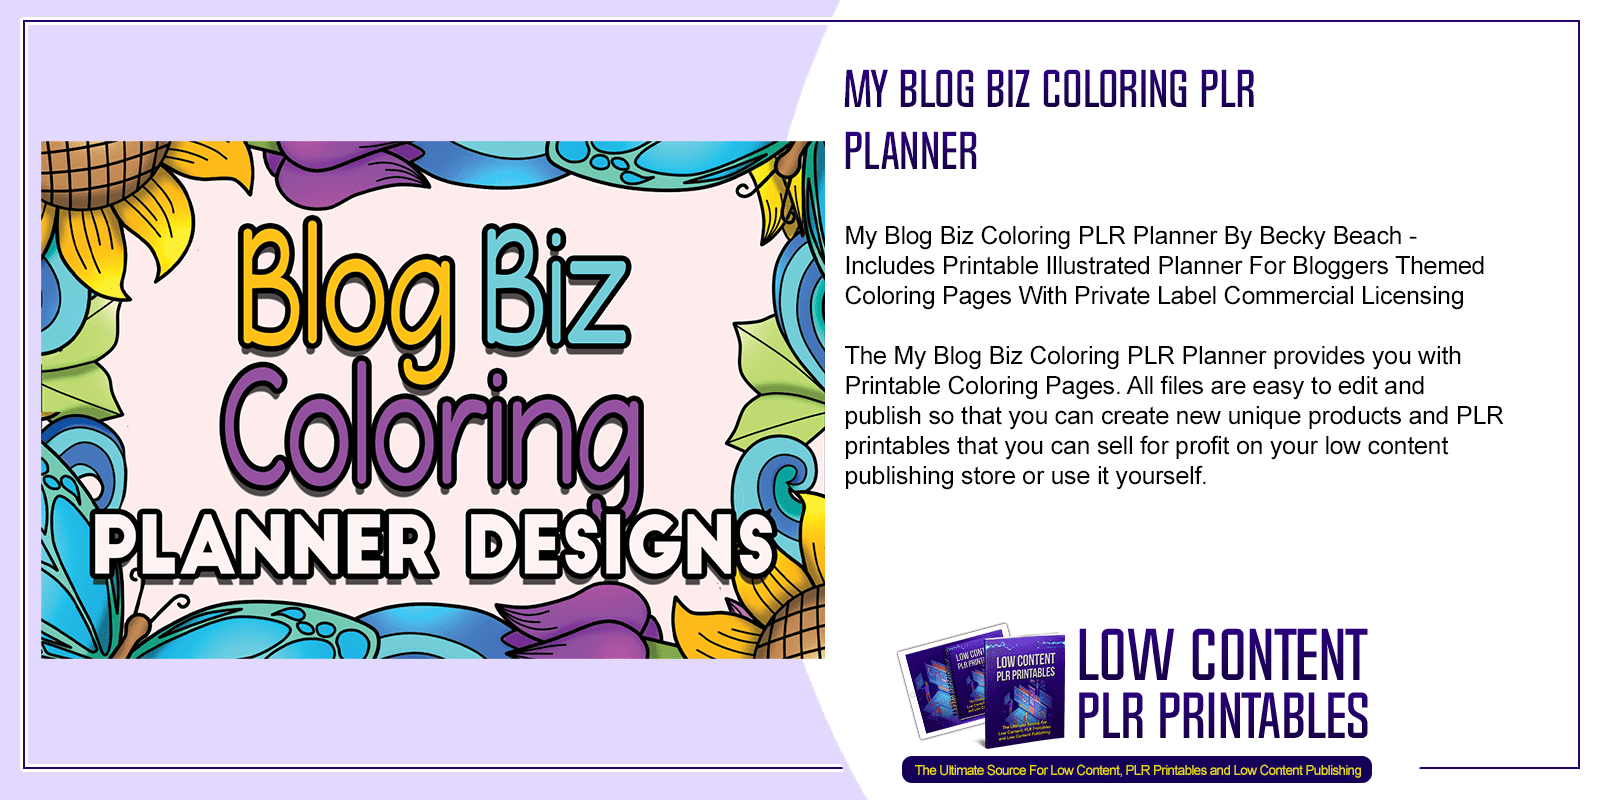 My Blog Biz Coloring PLR Planner